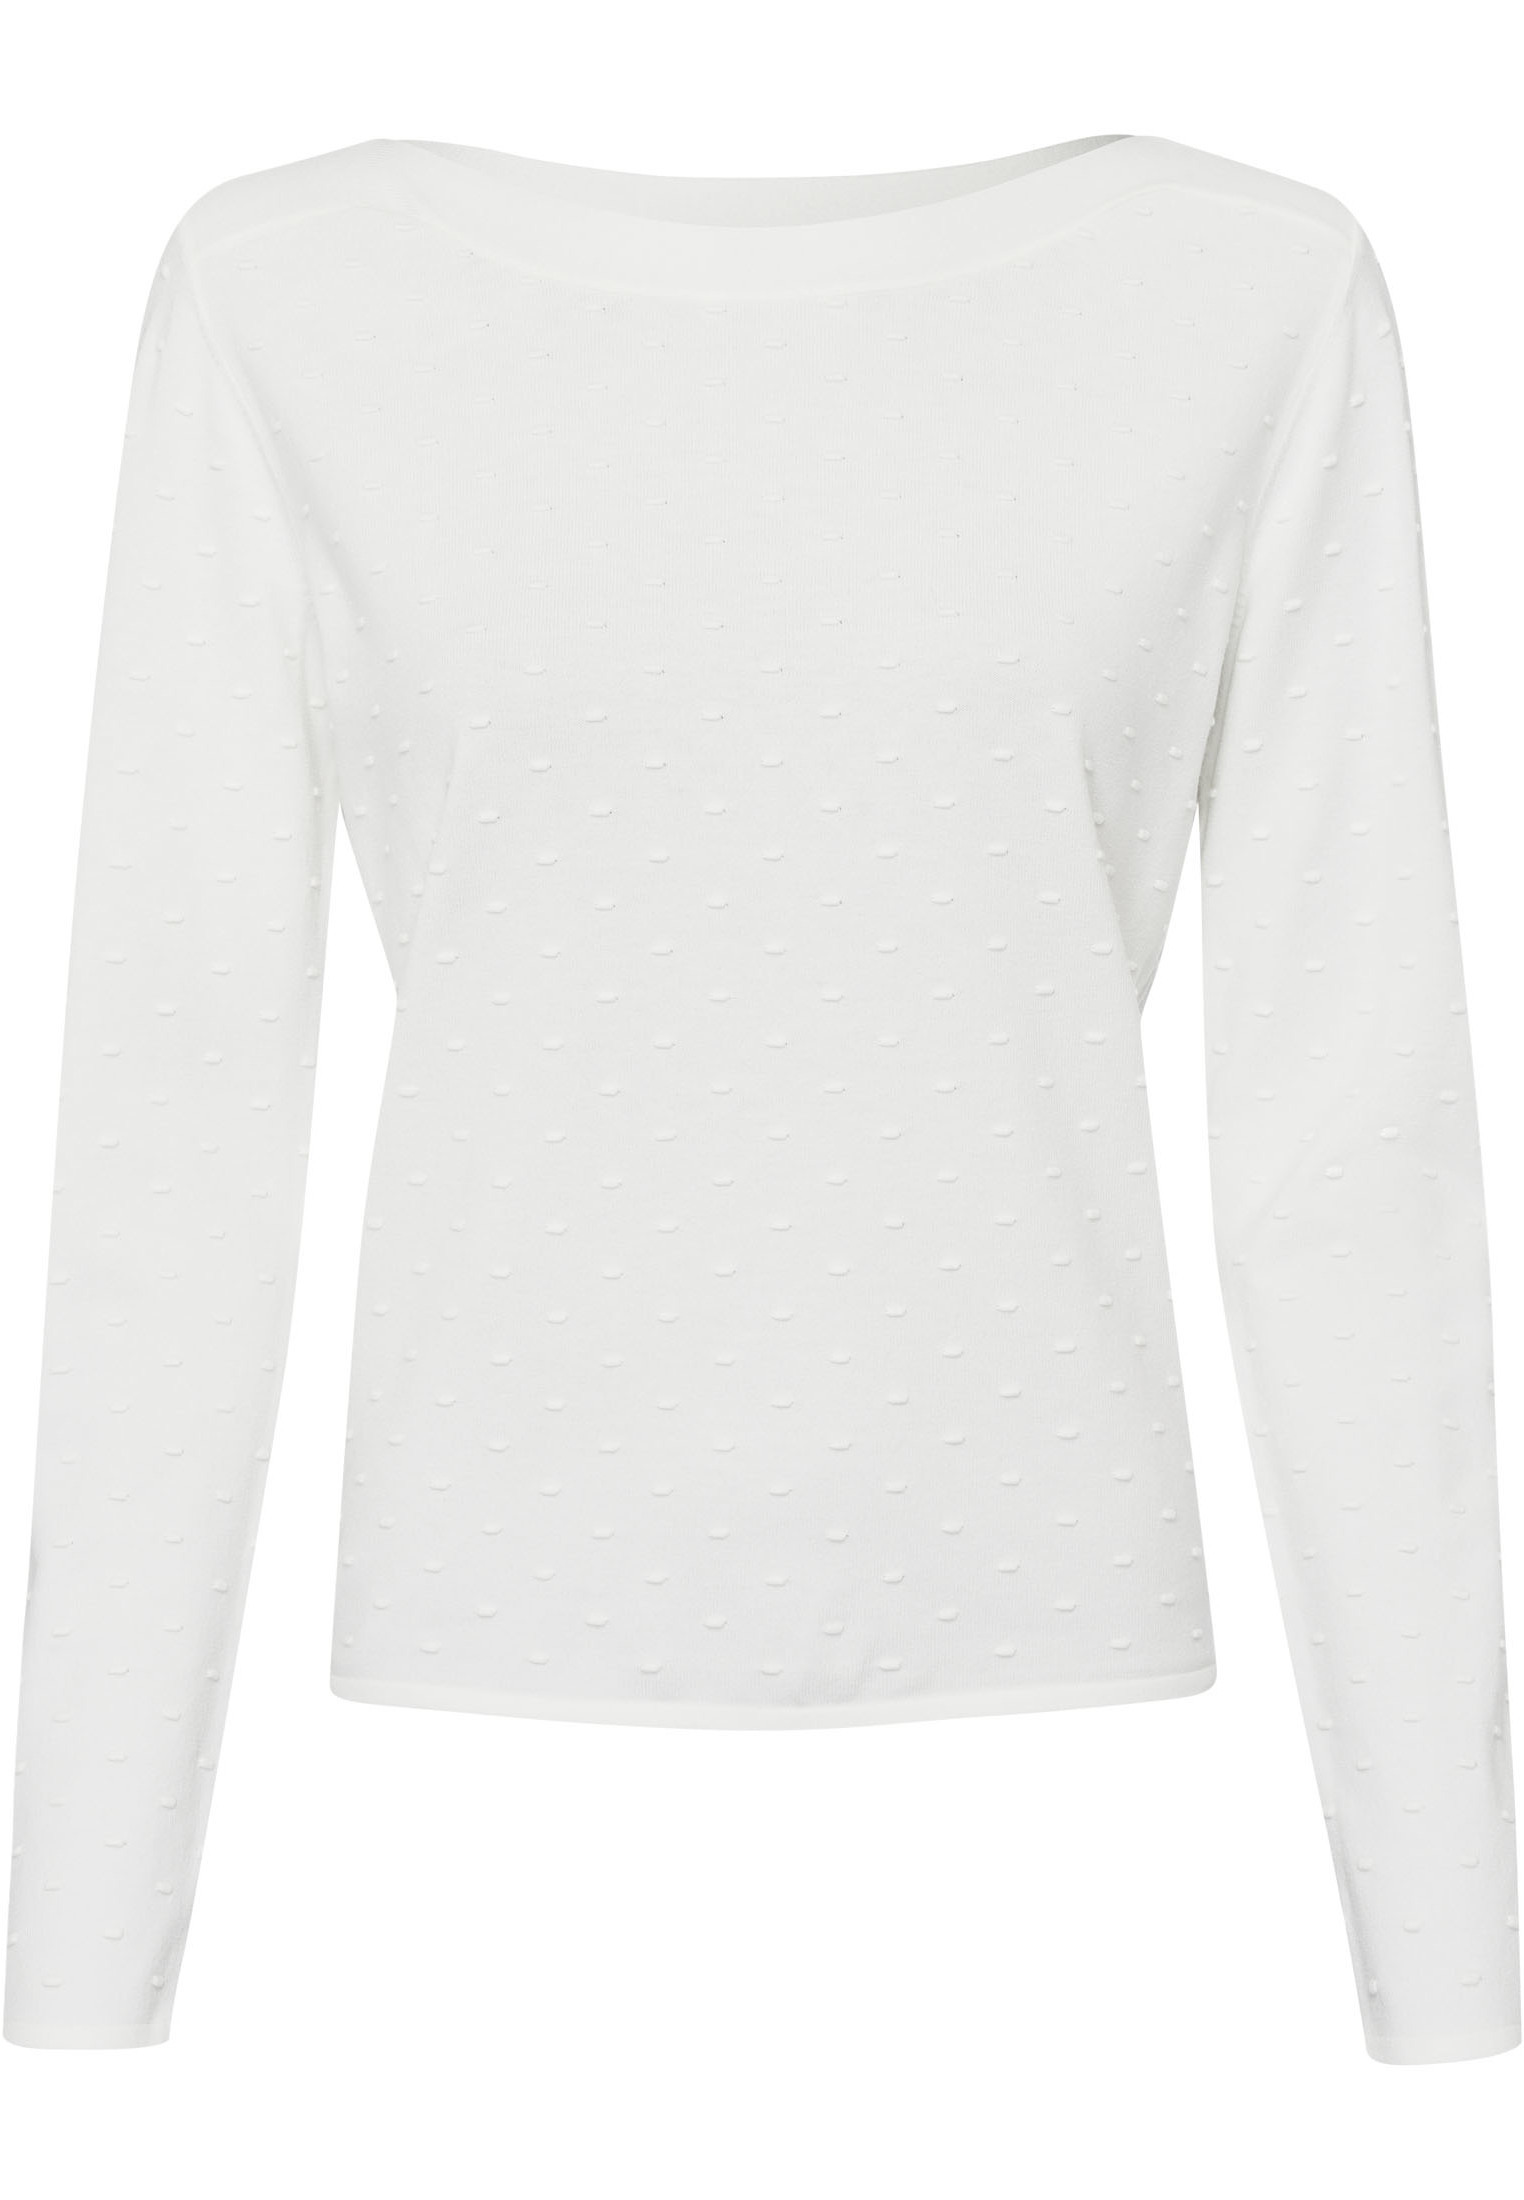 свитер zero mit punktstickerei цвет arabesque Свитер Zero mit Punktstickerei, белый